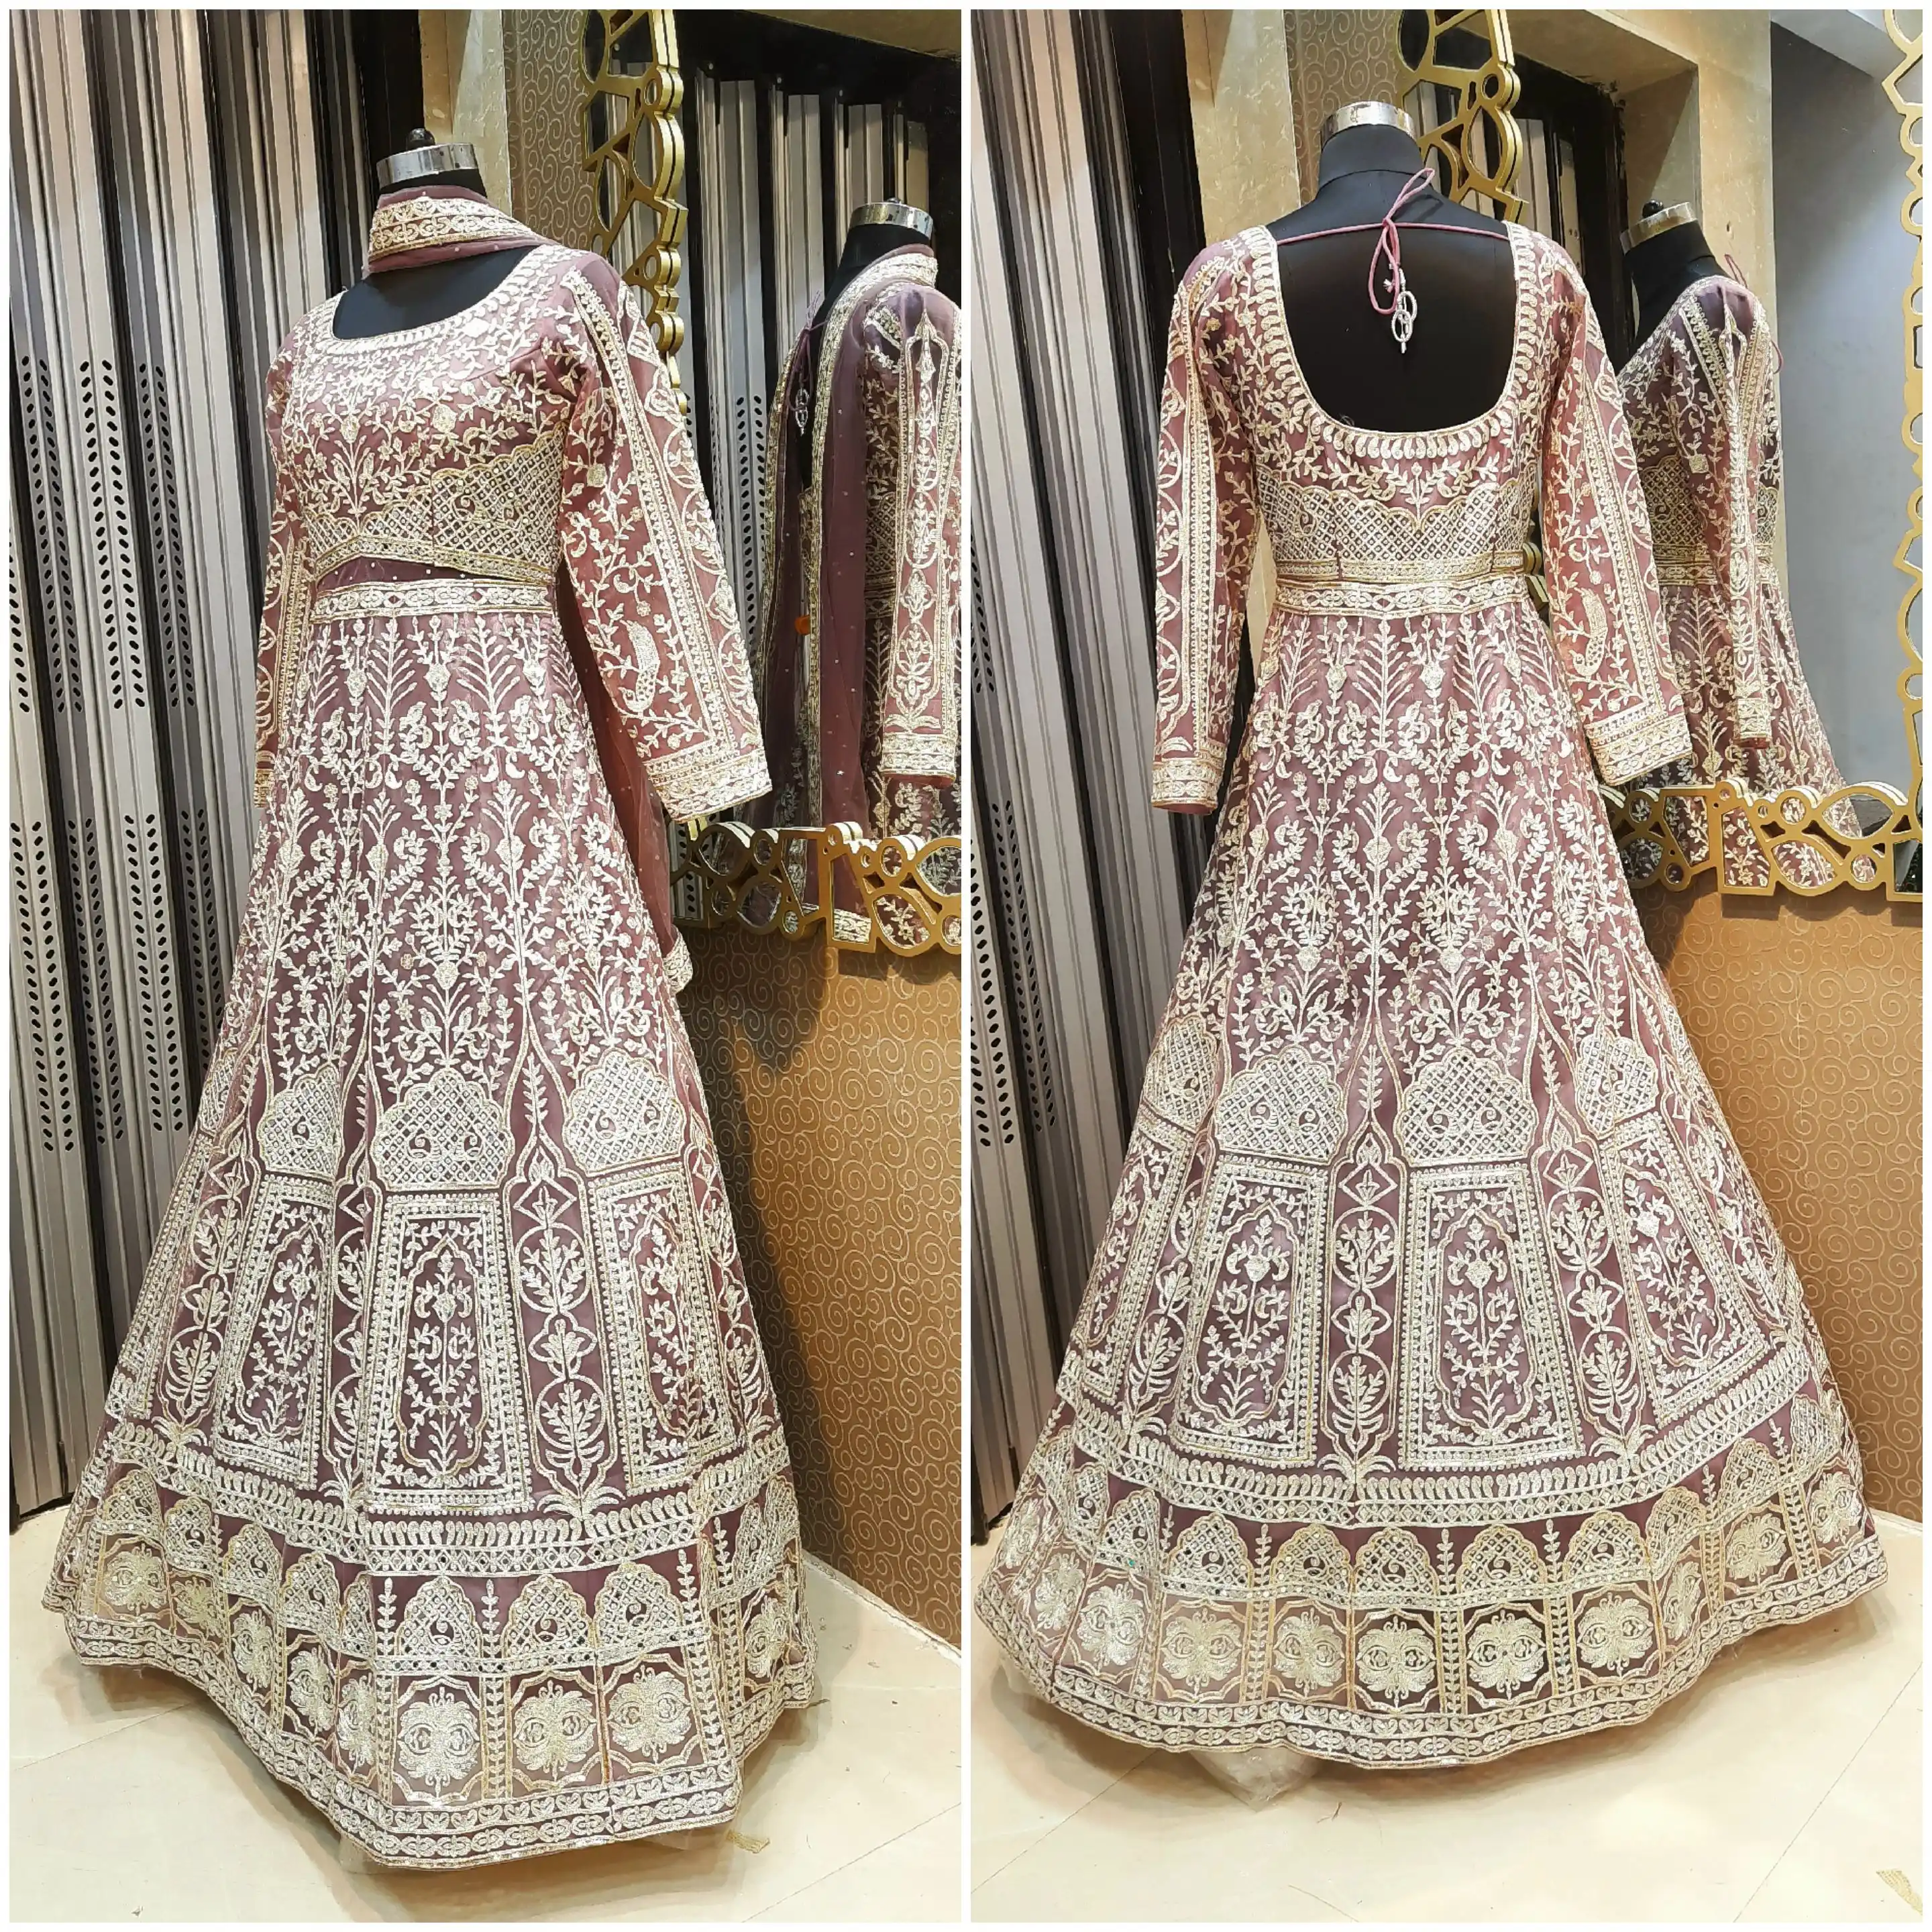 Ladies Gown Manufacturers in Delhi